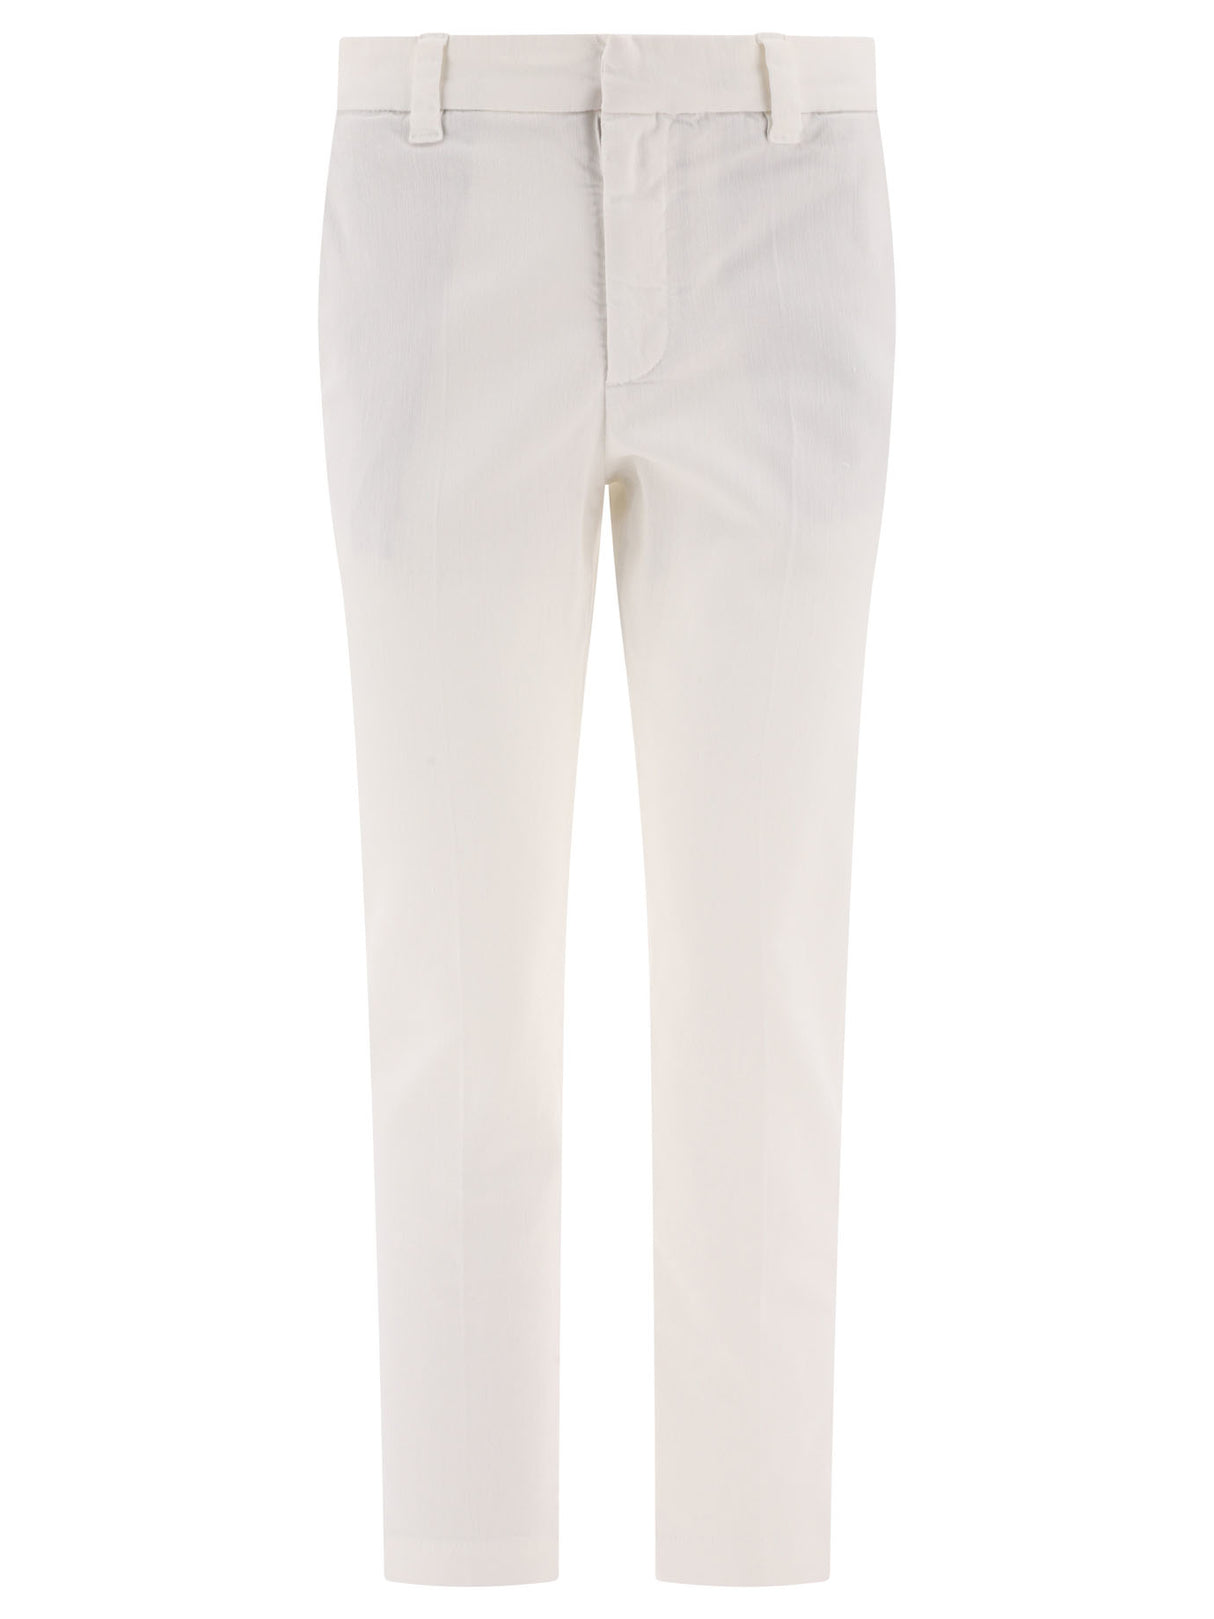 BRUNELLO CUCINELLI White Cigarette Trousers for Women - Regular Fit, Zip-Fly Closure, Monili Detail